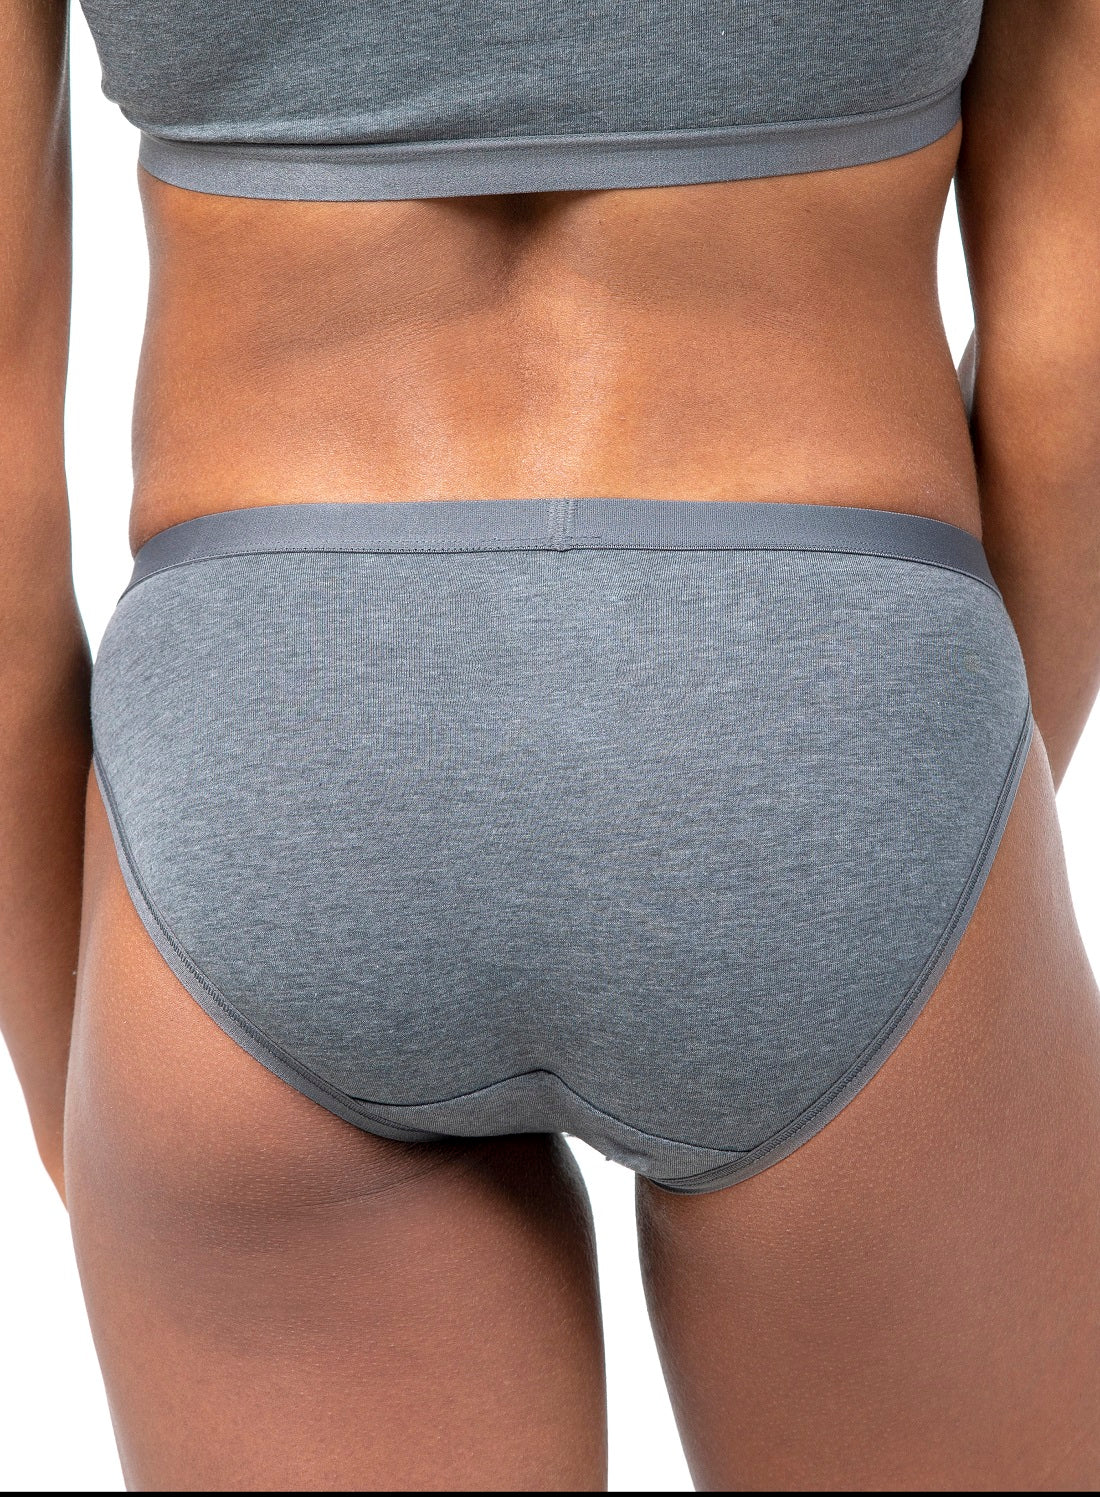 6 x Bonds Hipster Bikini Match Its Womens Underwear Grey - Marble